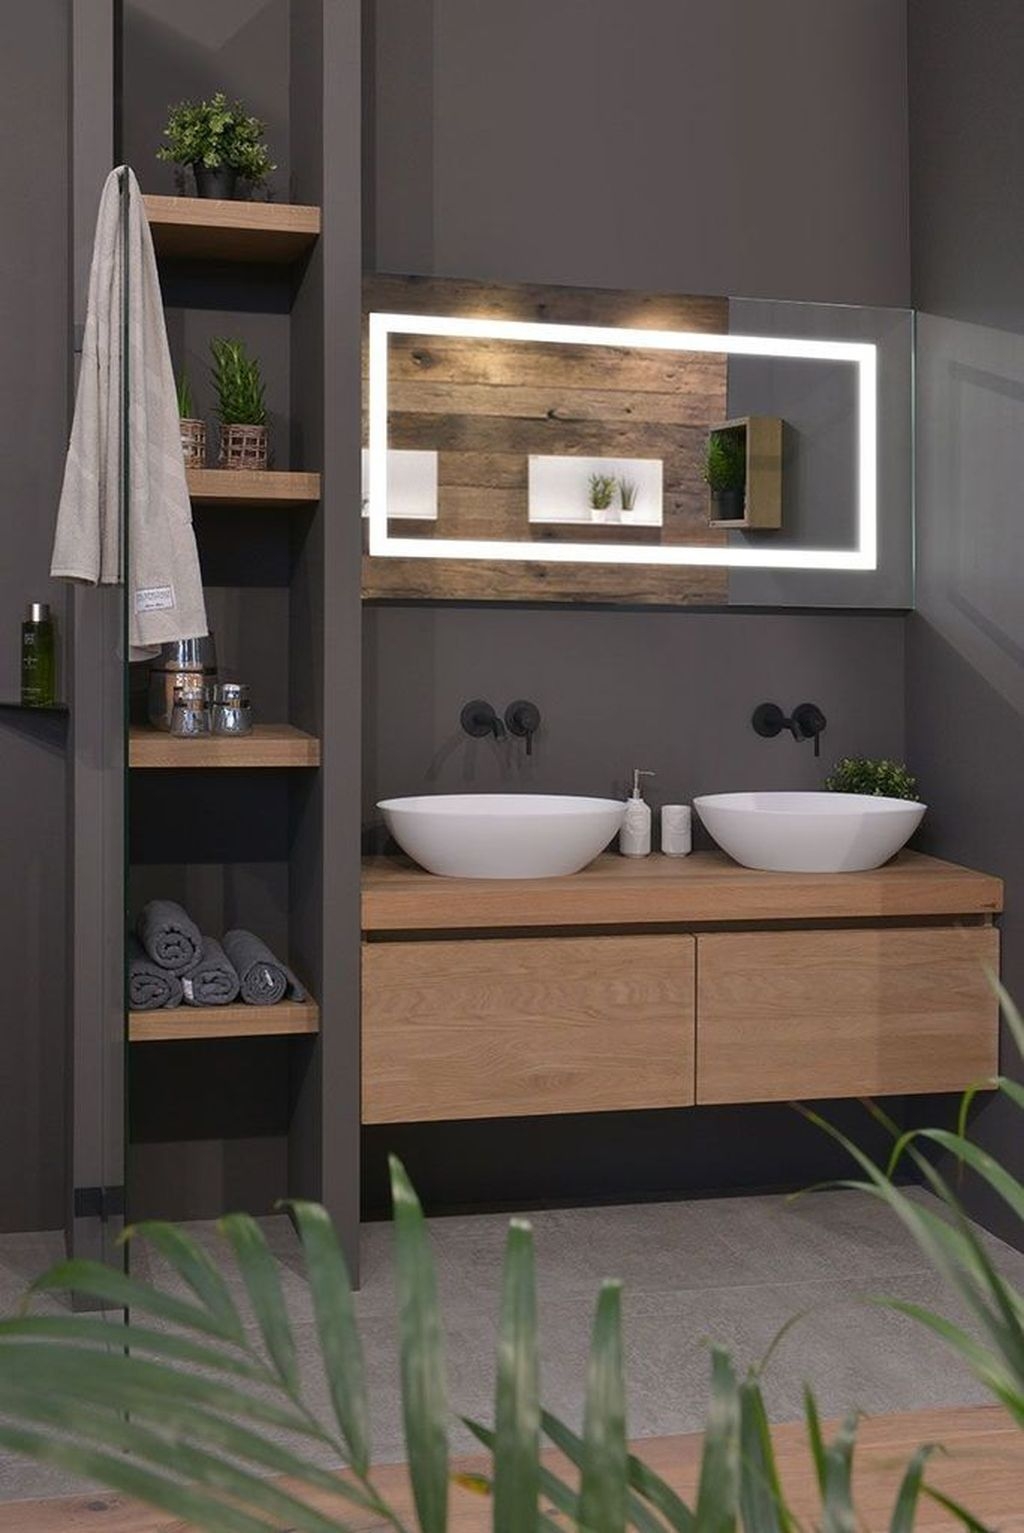 Inspiring Bathroom Decoration Ideas With Wooden Storage 11